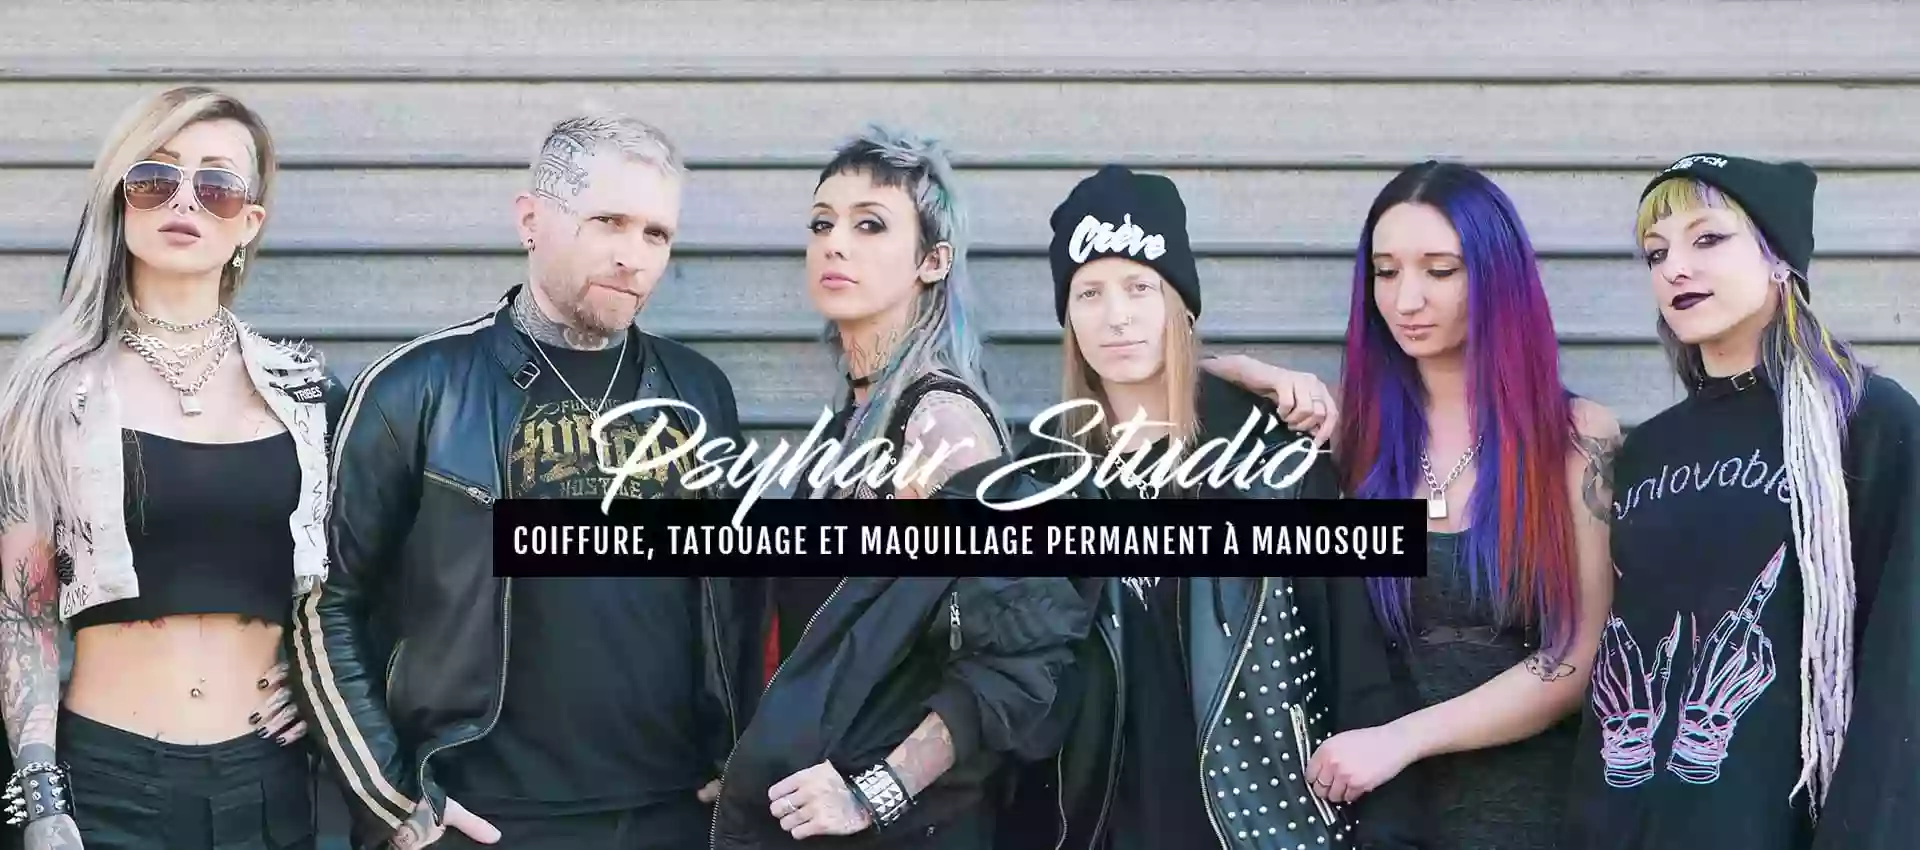 Psyhair Studio